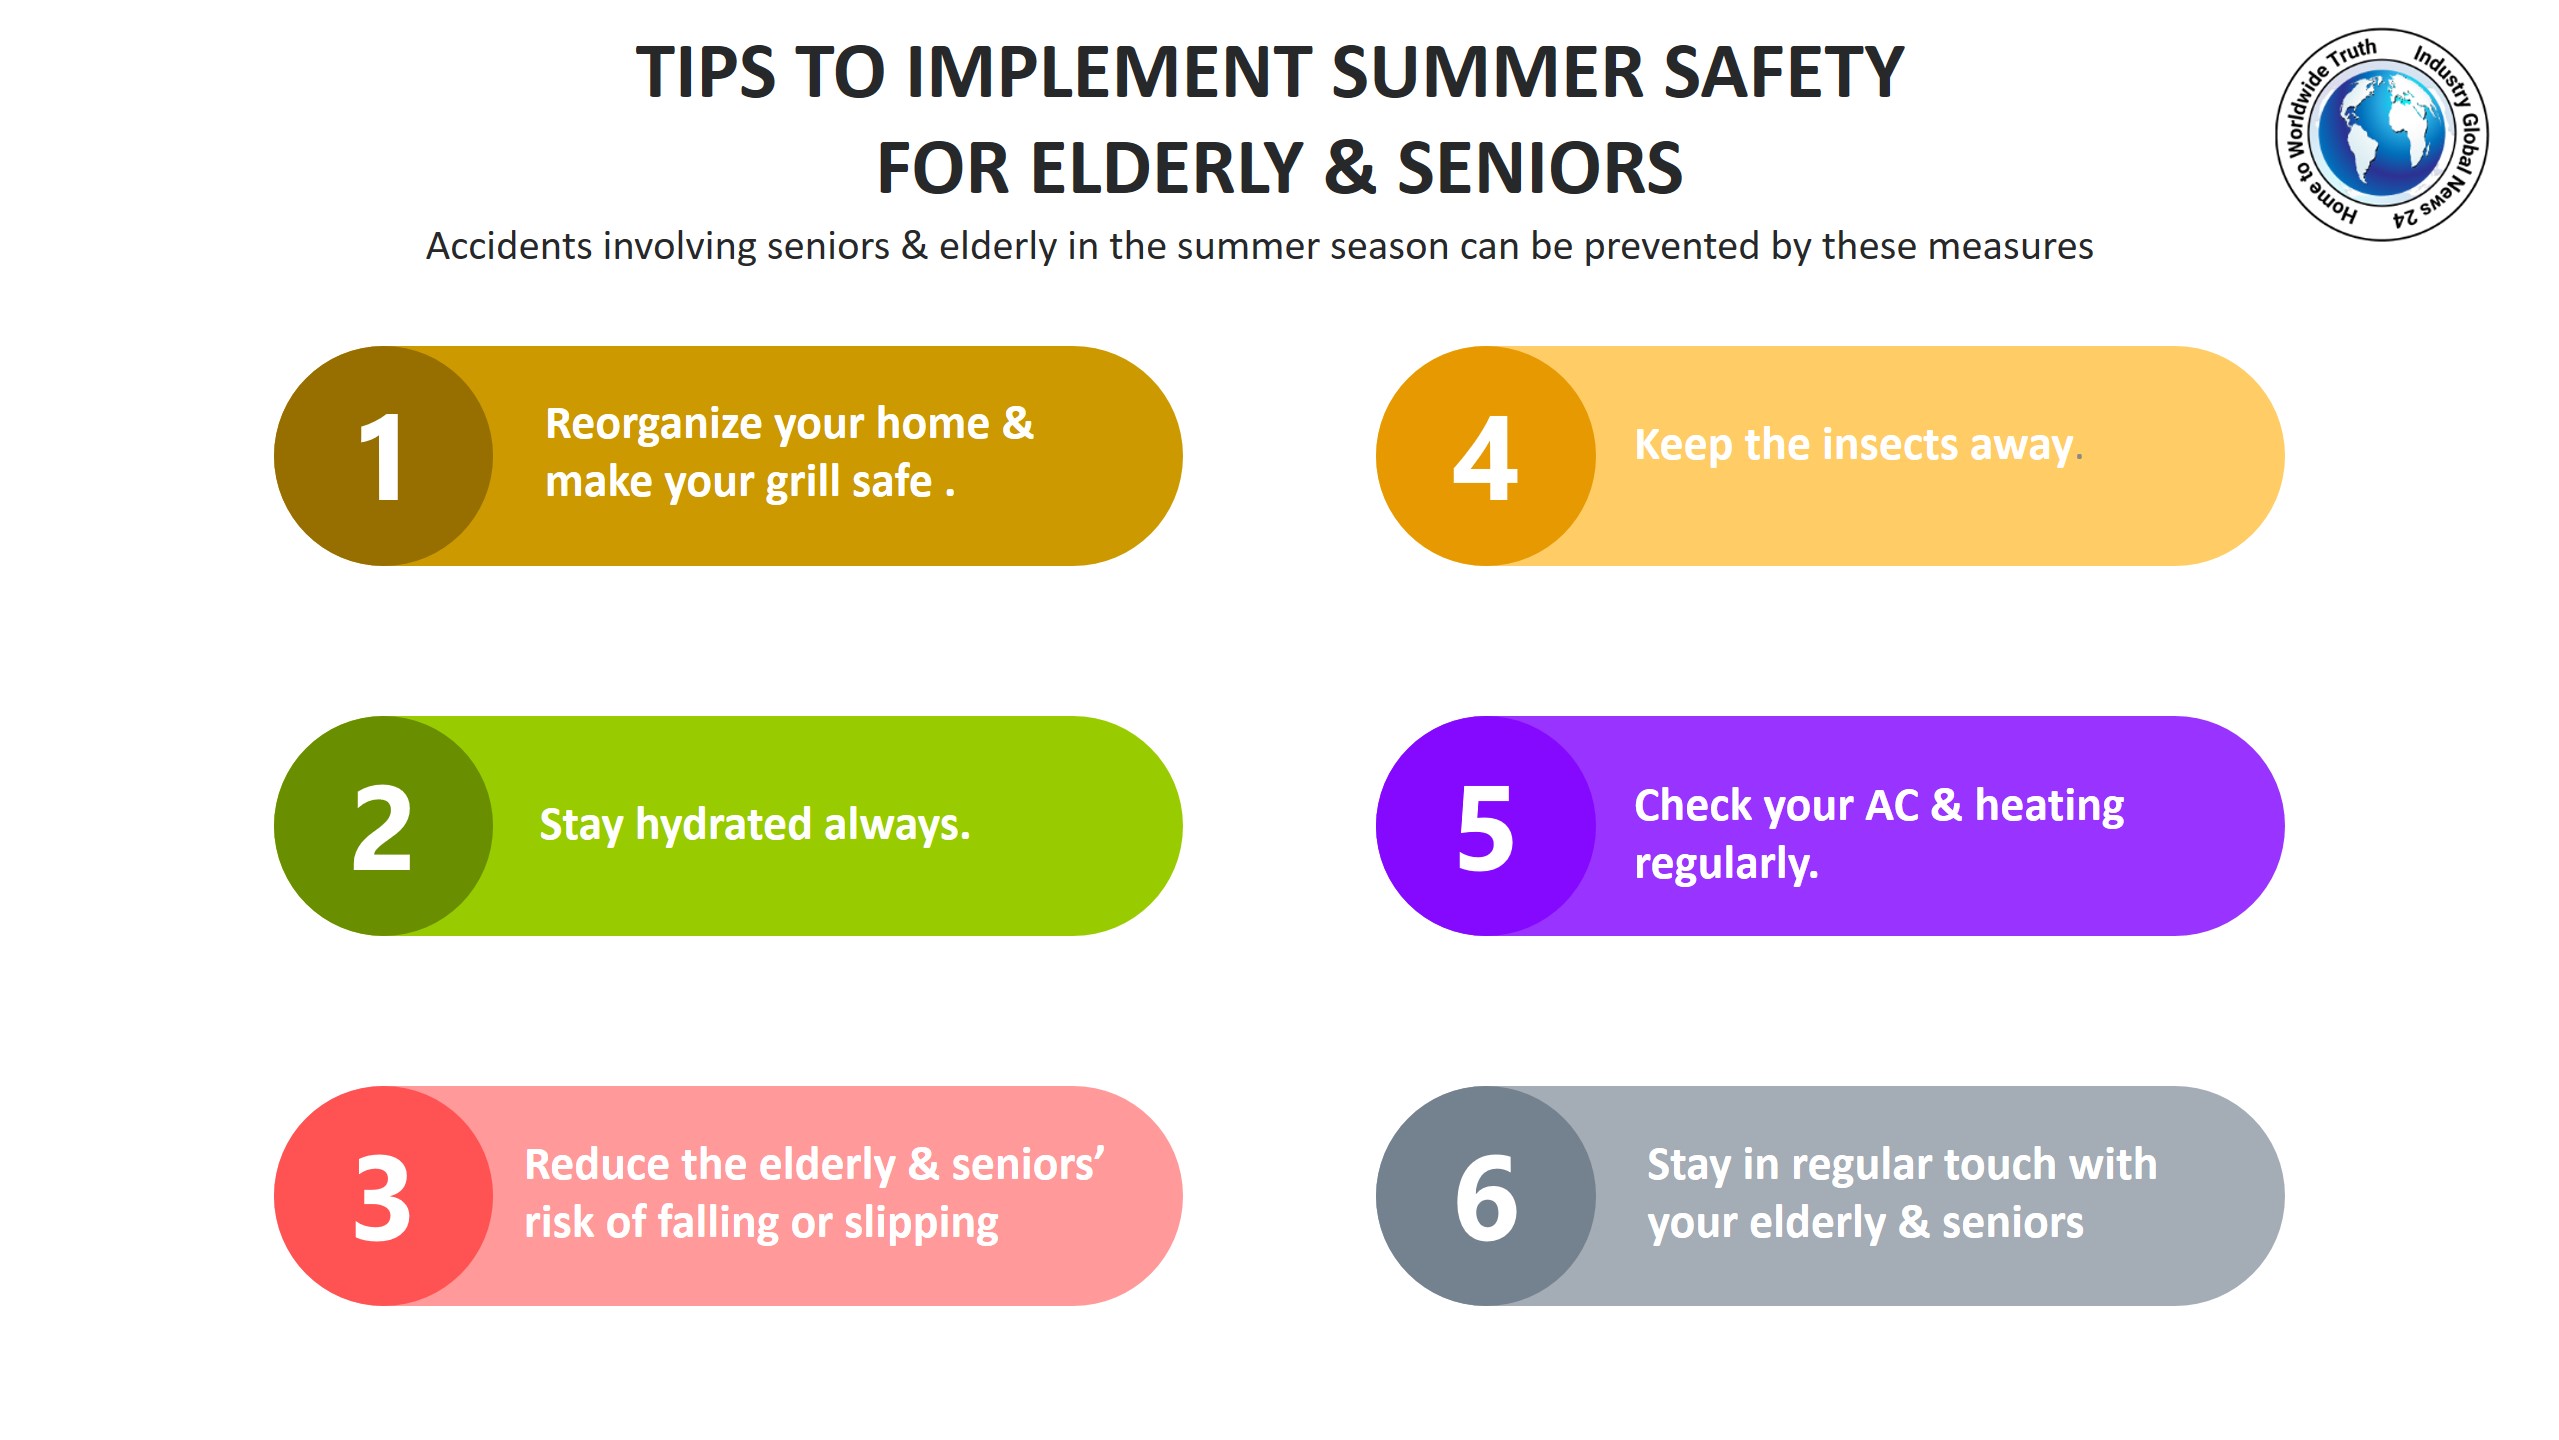 Tips to implement summer safety for elderly & seniors